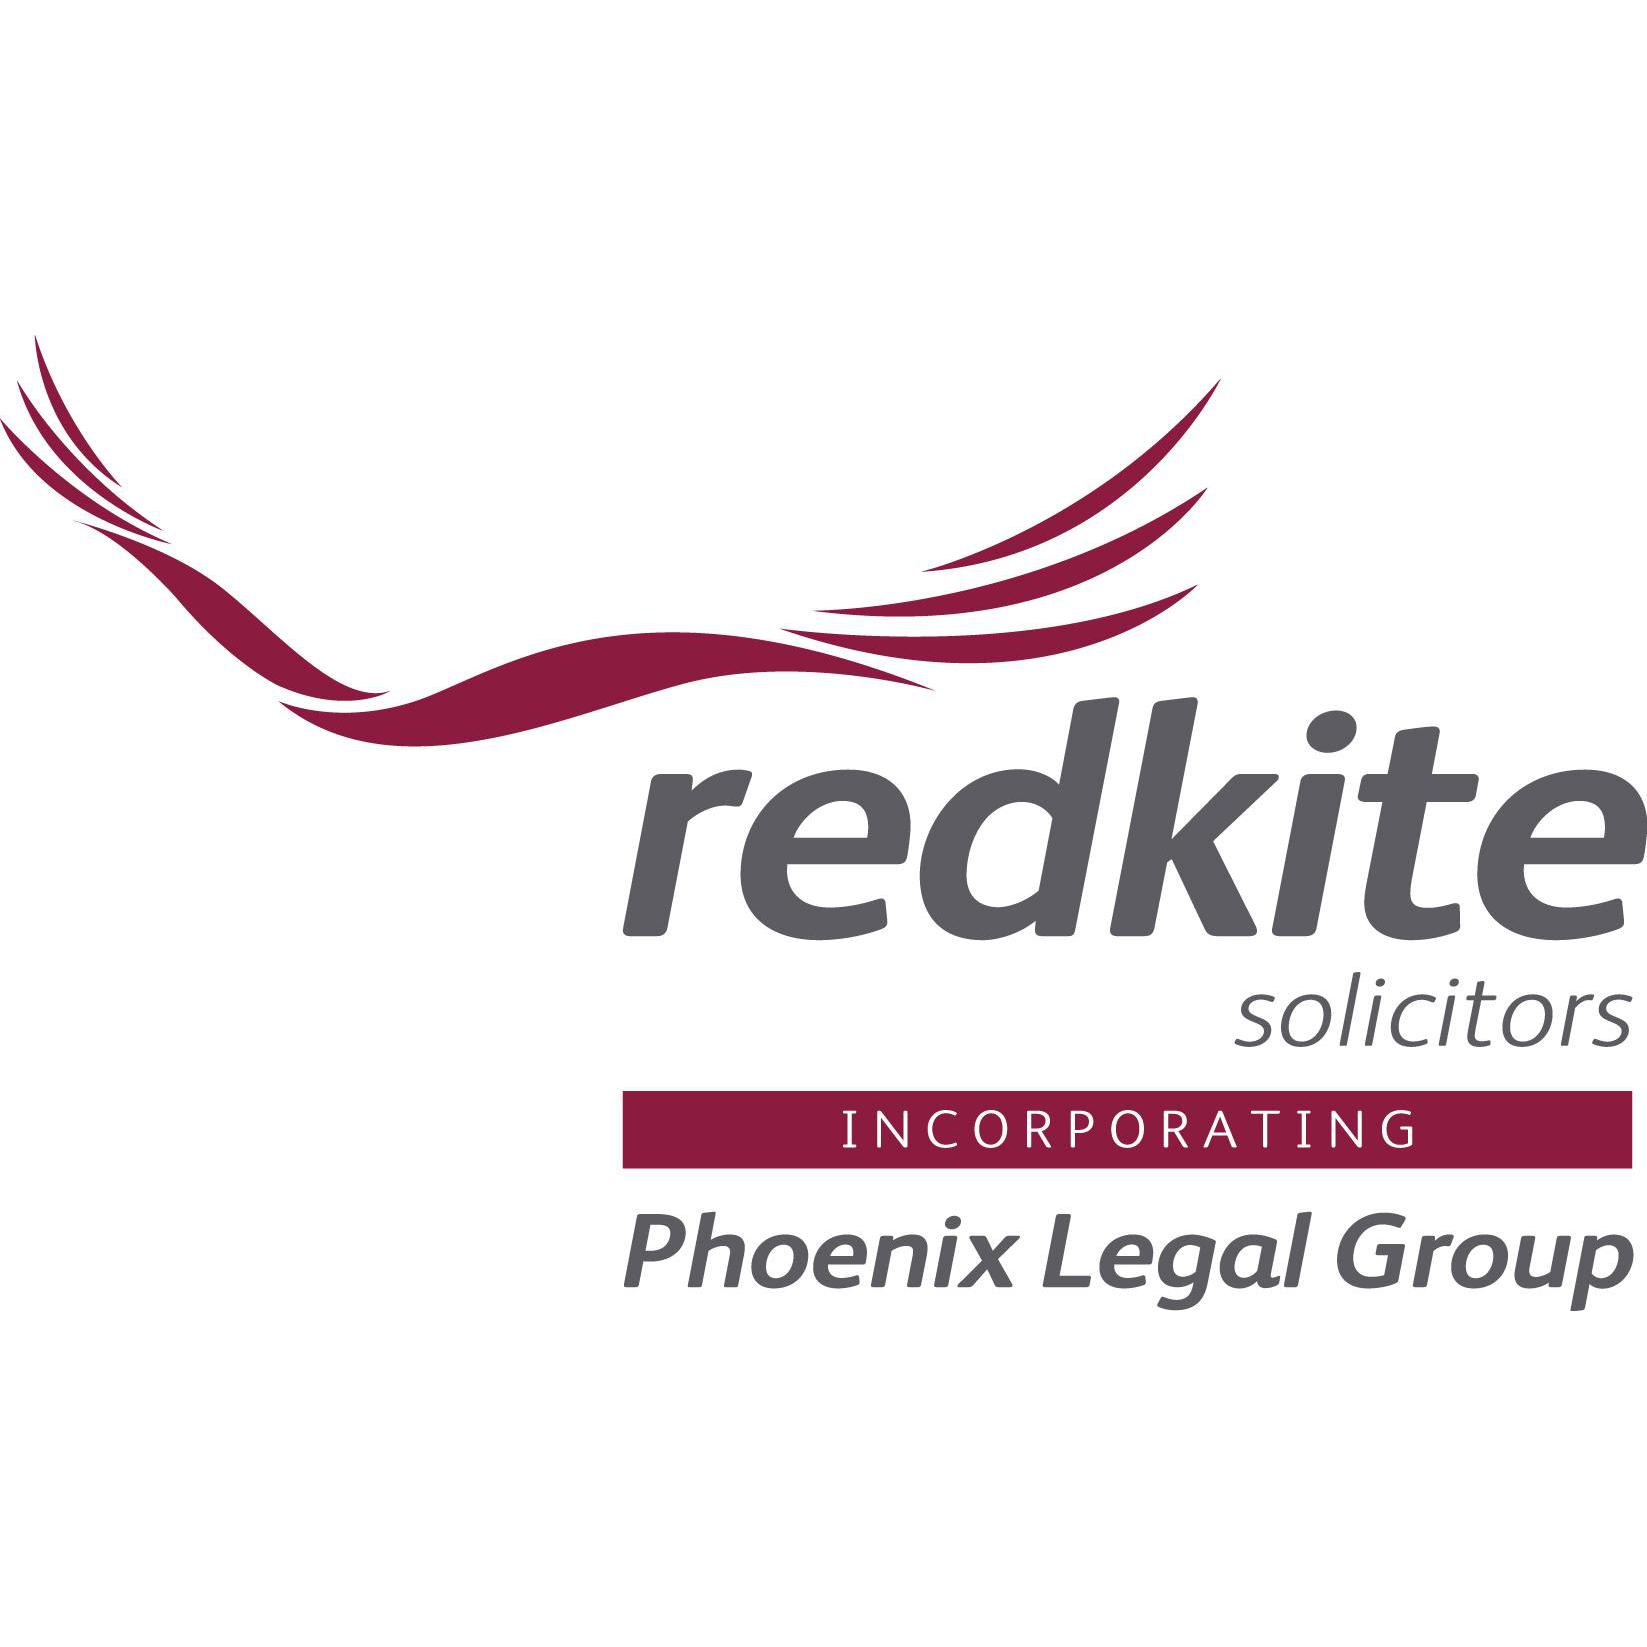 Redkite Solicitors Incorporating Phoenix Legal Group Logo